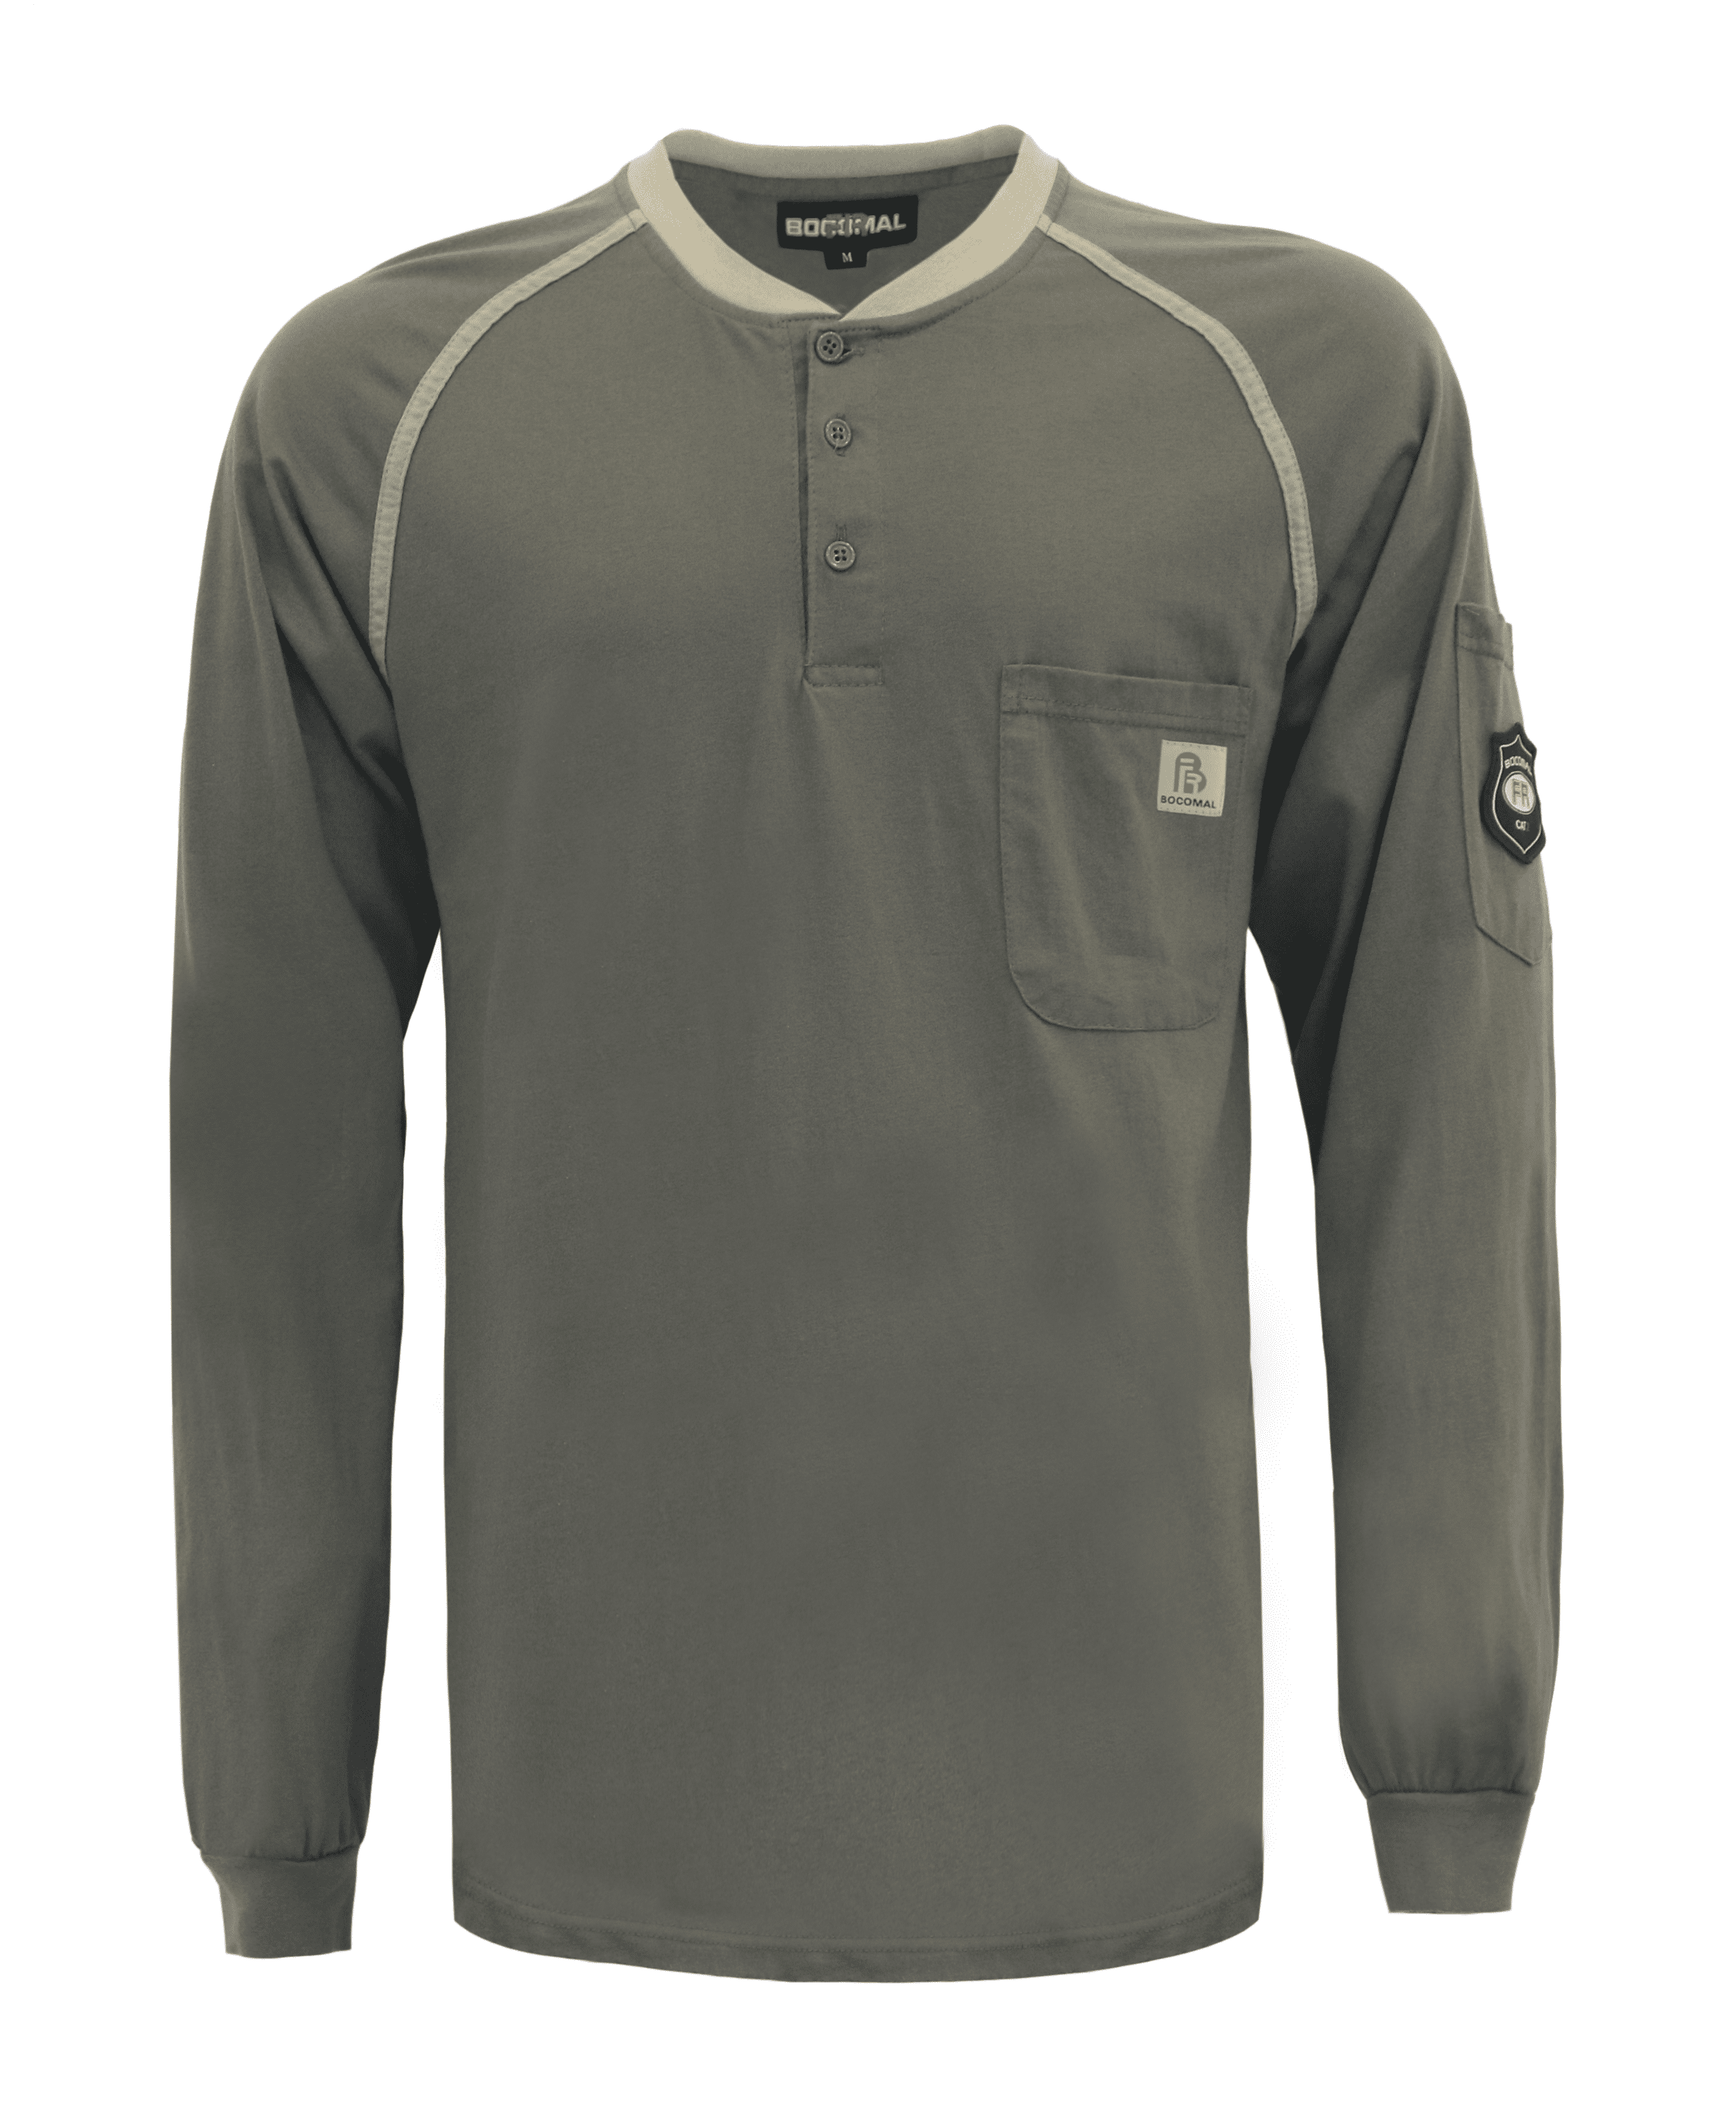 BOCOMAL FR Shirts Flame Resistant Shirt 5.5oz 100% Cotton Light Weight CAT2 Fire Retardant Henley Shirts 